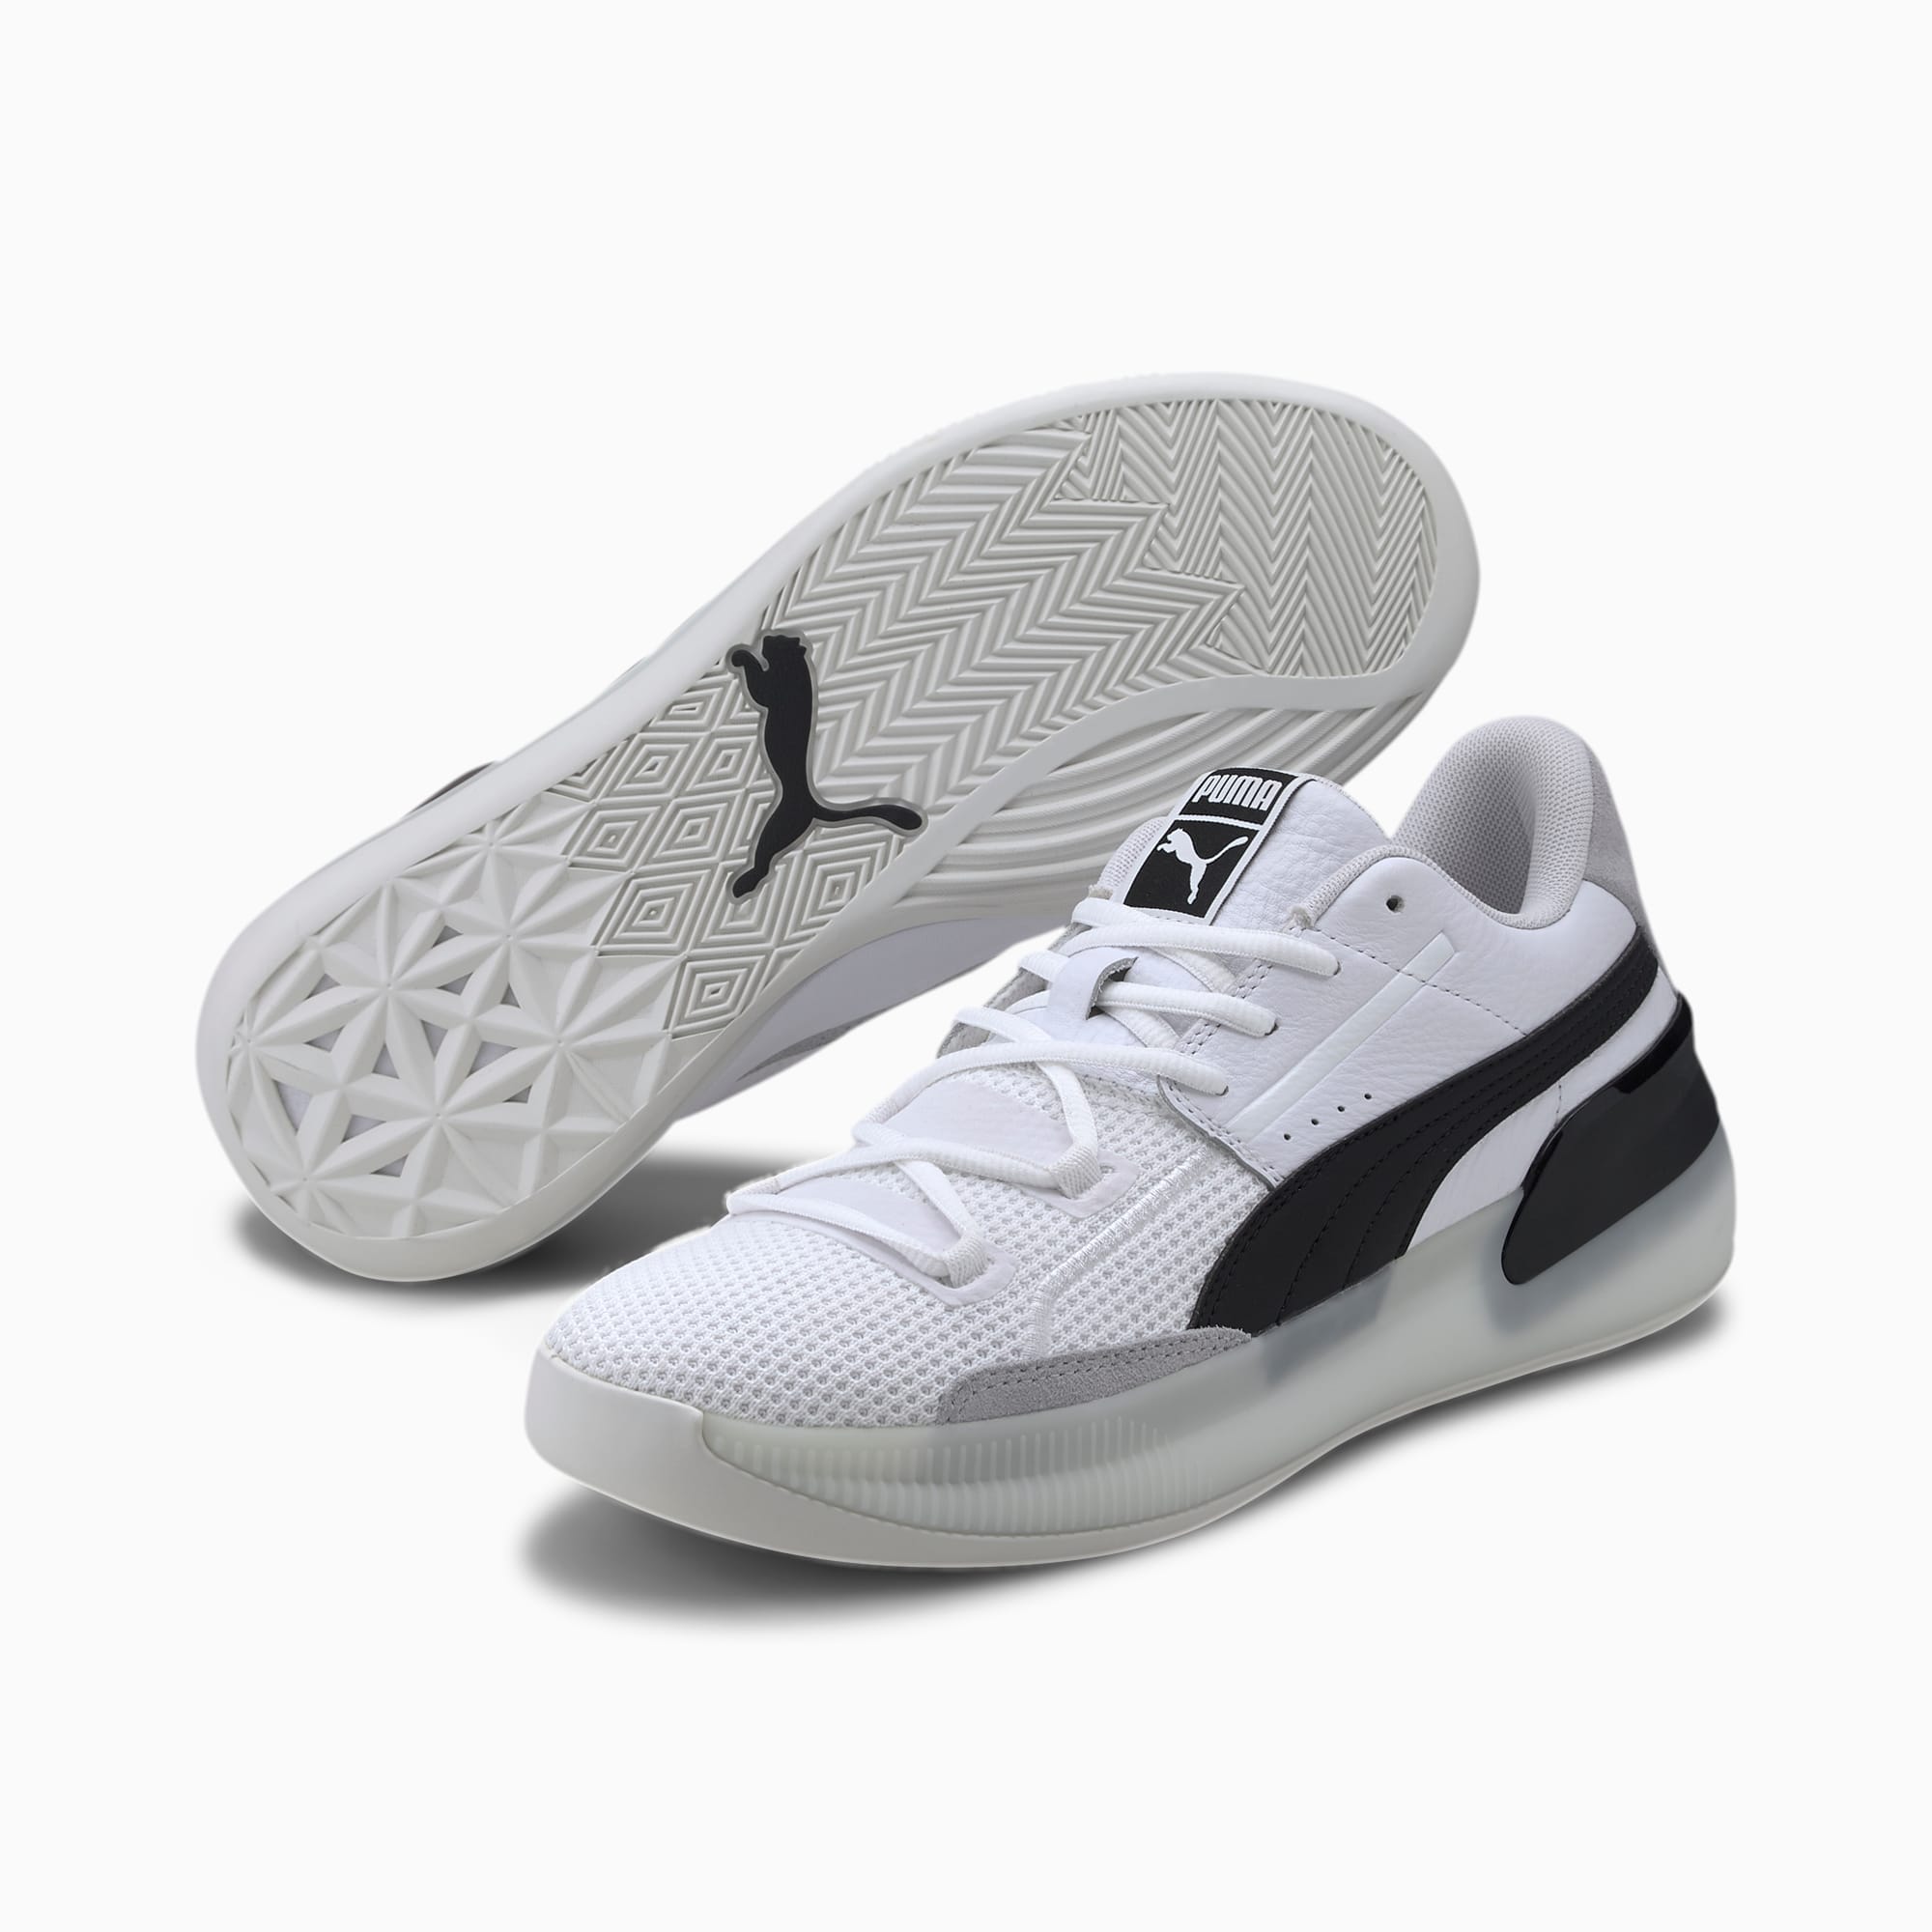 Clyde Hardwood Basketball Shoes | PUMA US